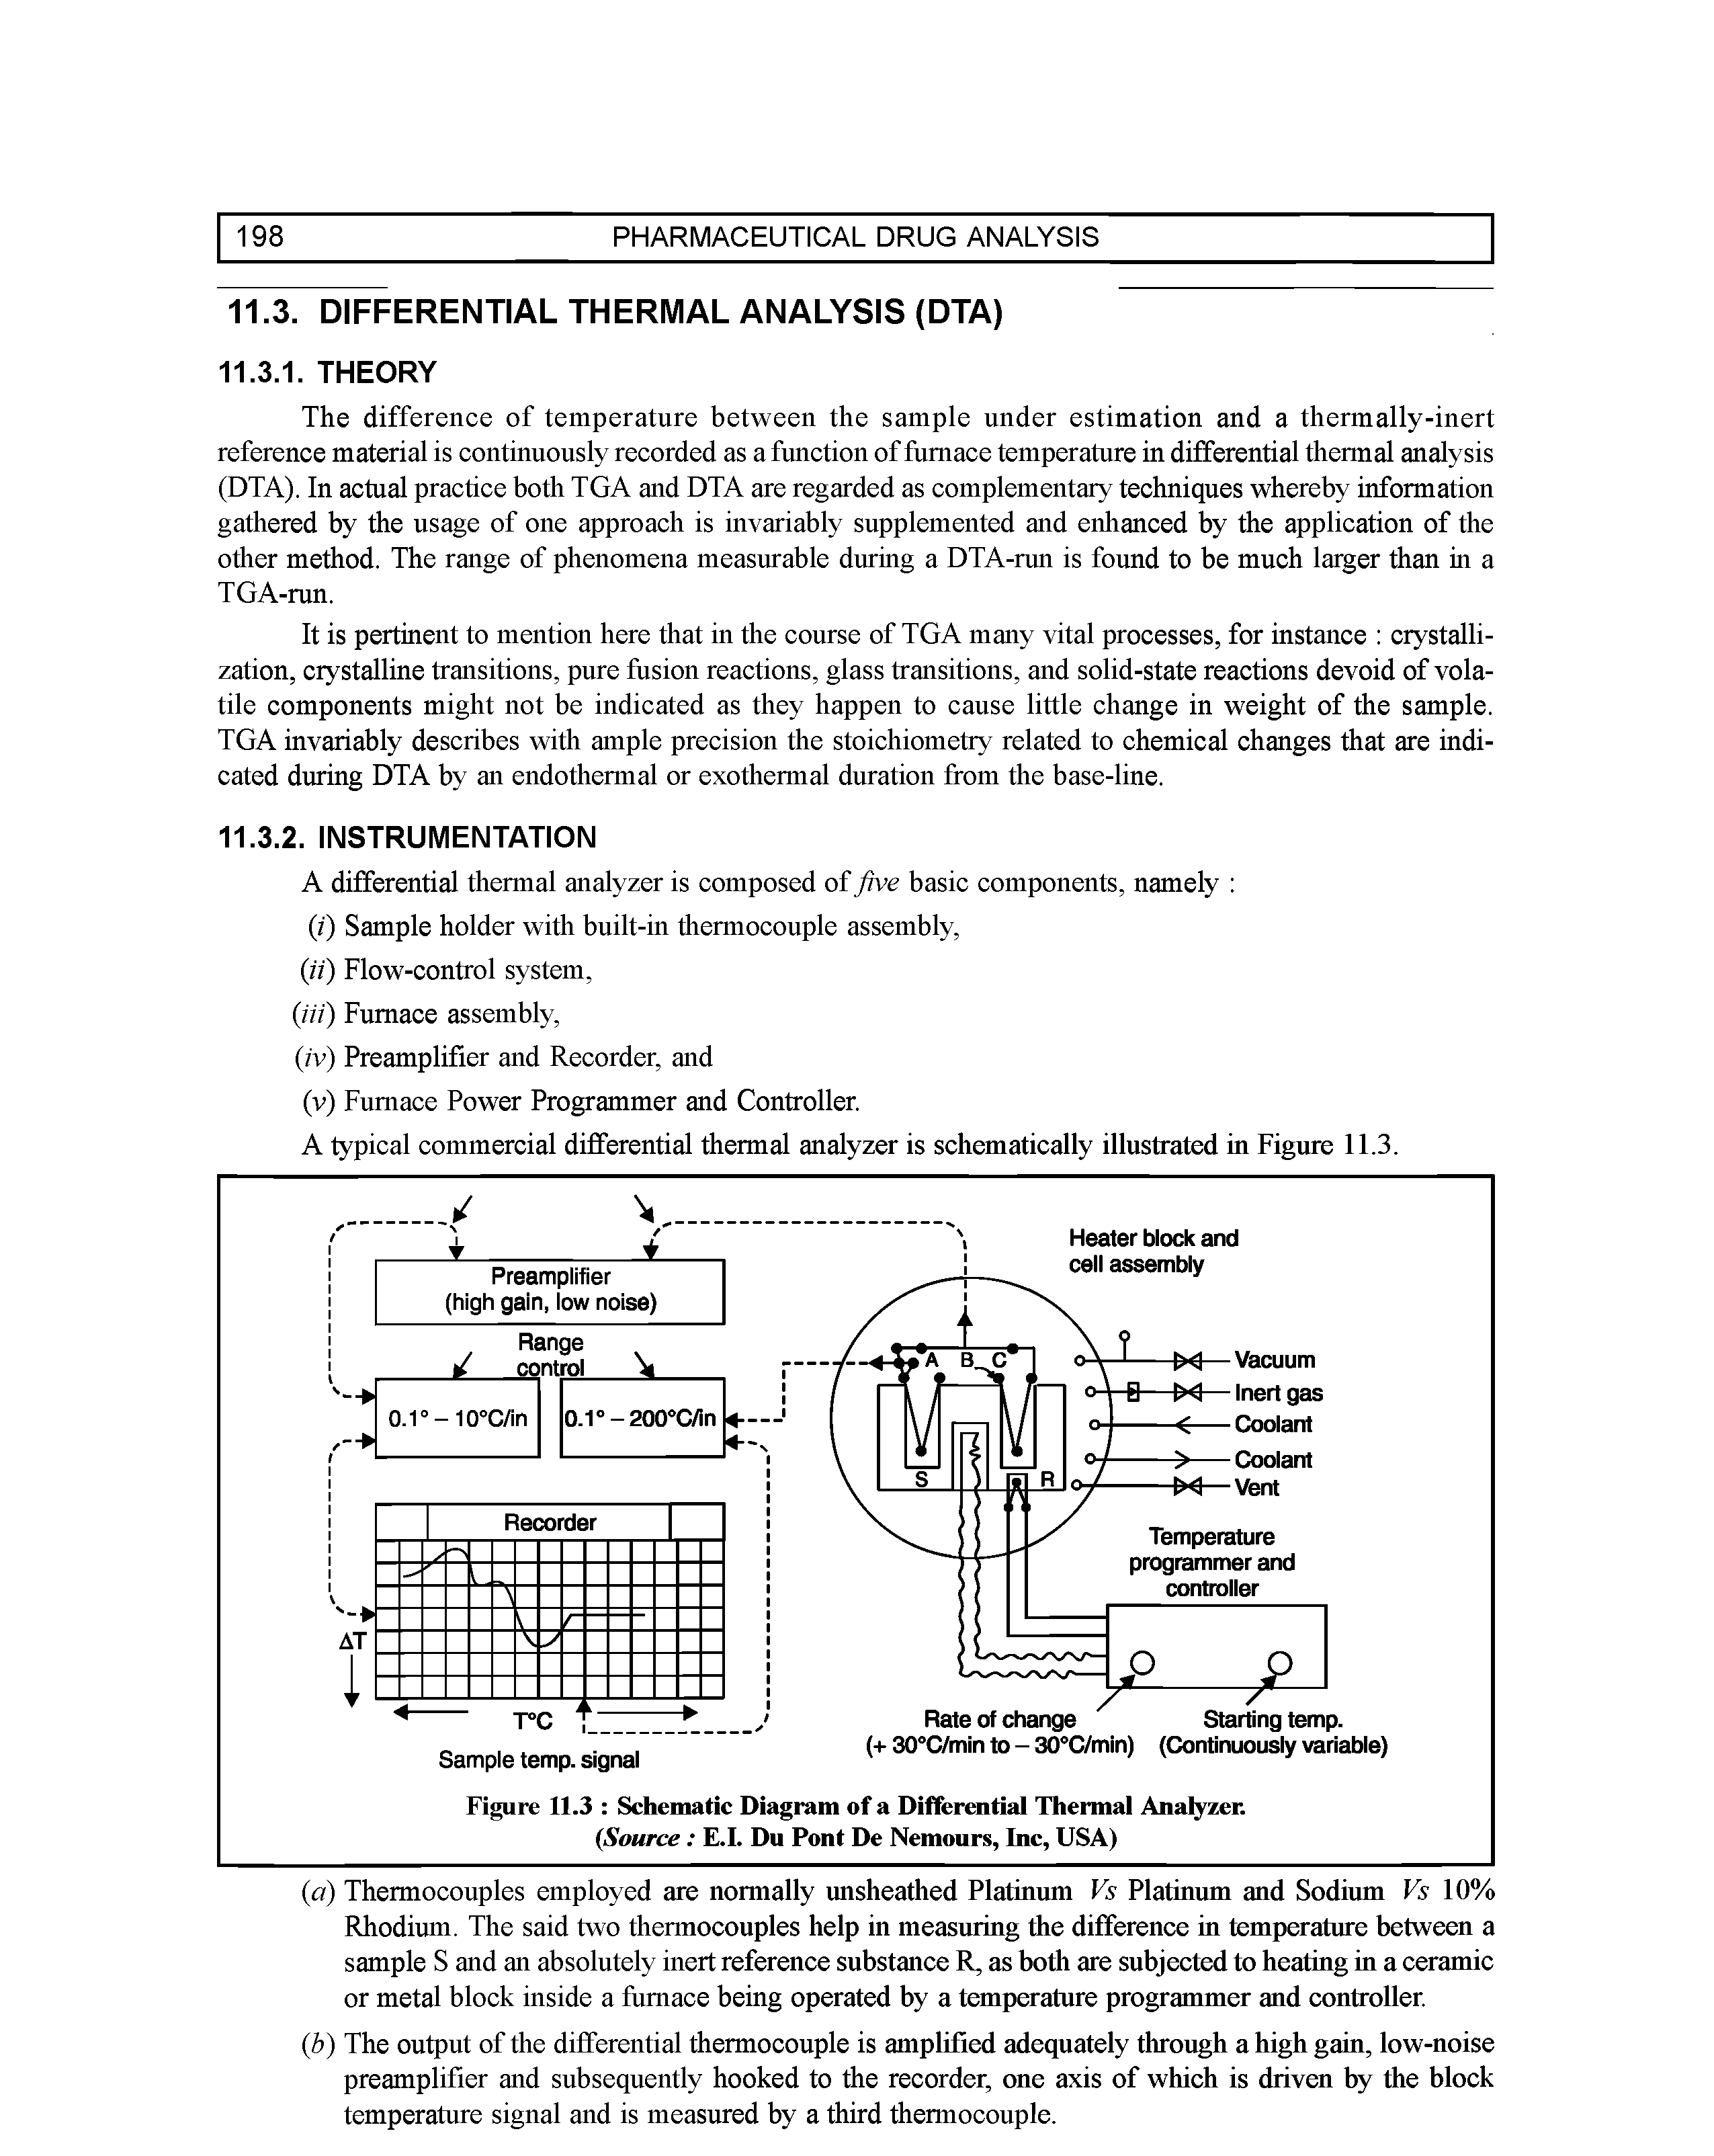 Figure 11.3 Schematic Diagram of a Differential Thermal Analyzer. (Source E.I. Du Pont De Nemours, Inc, USA)...